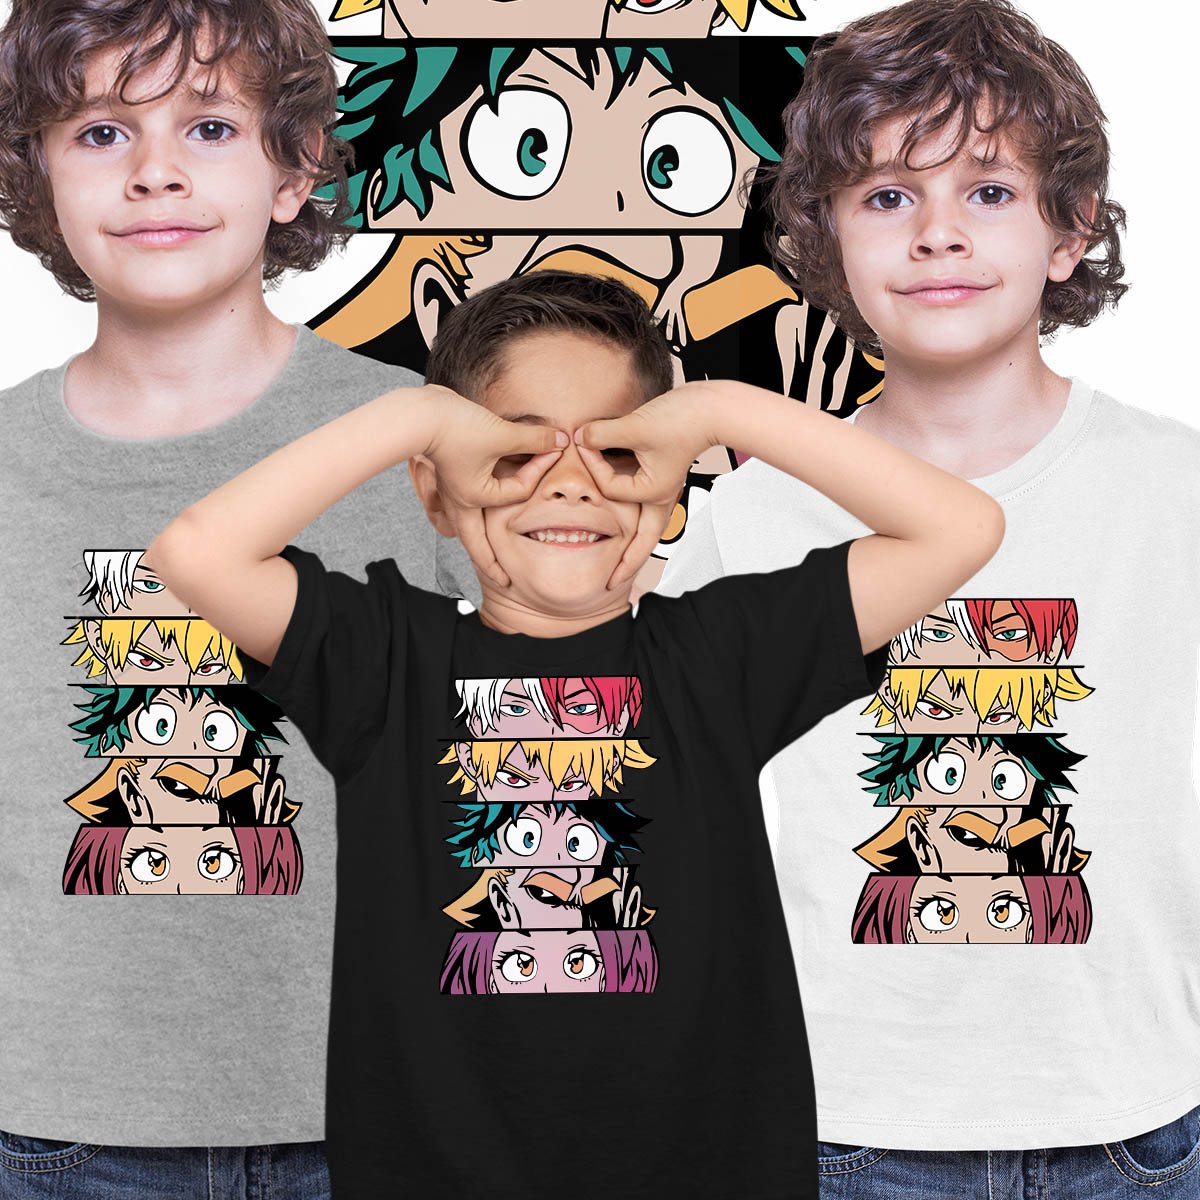 My Hero Academia Characters Anime Manga T-shirt for Kids